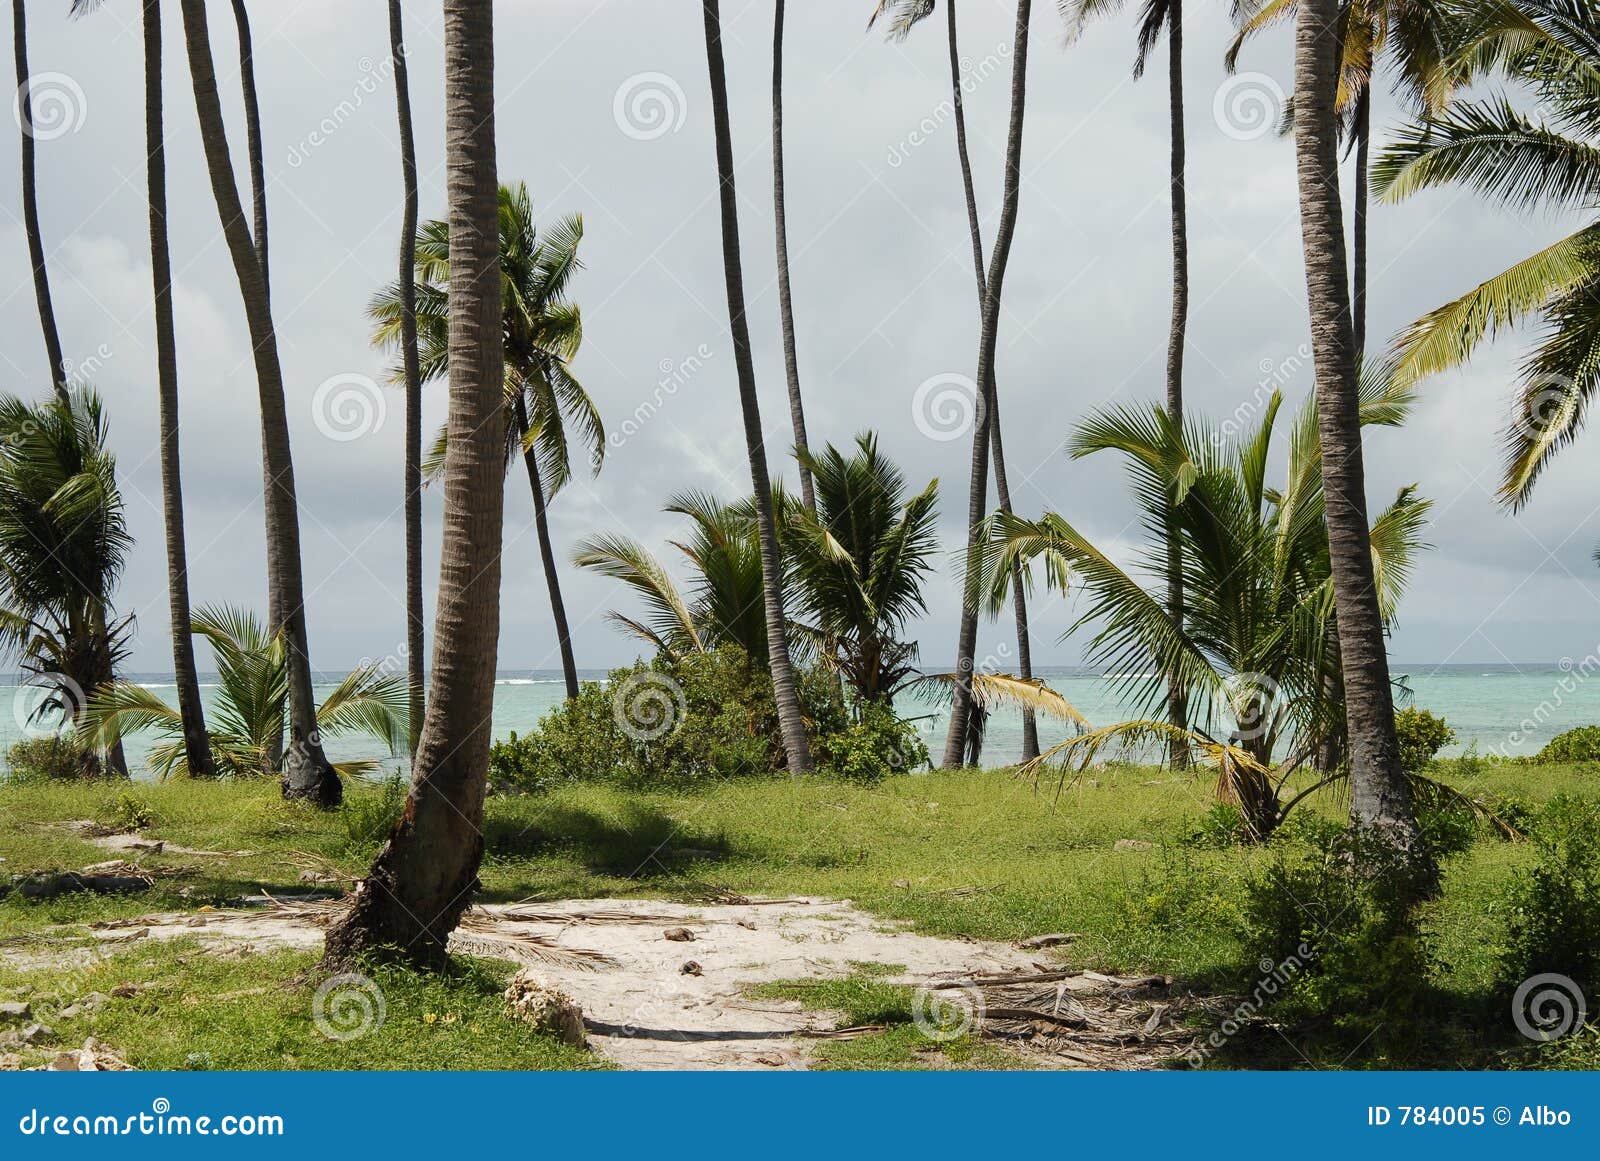 zanzibar beach vegetation